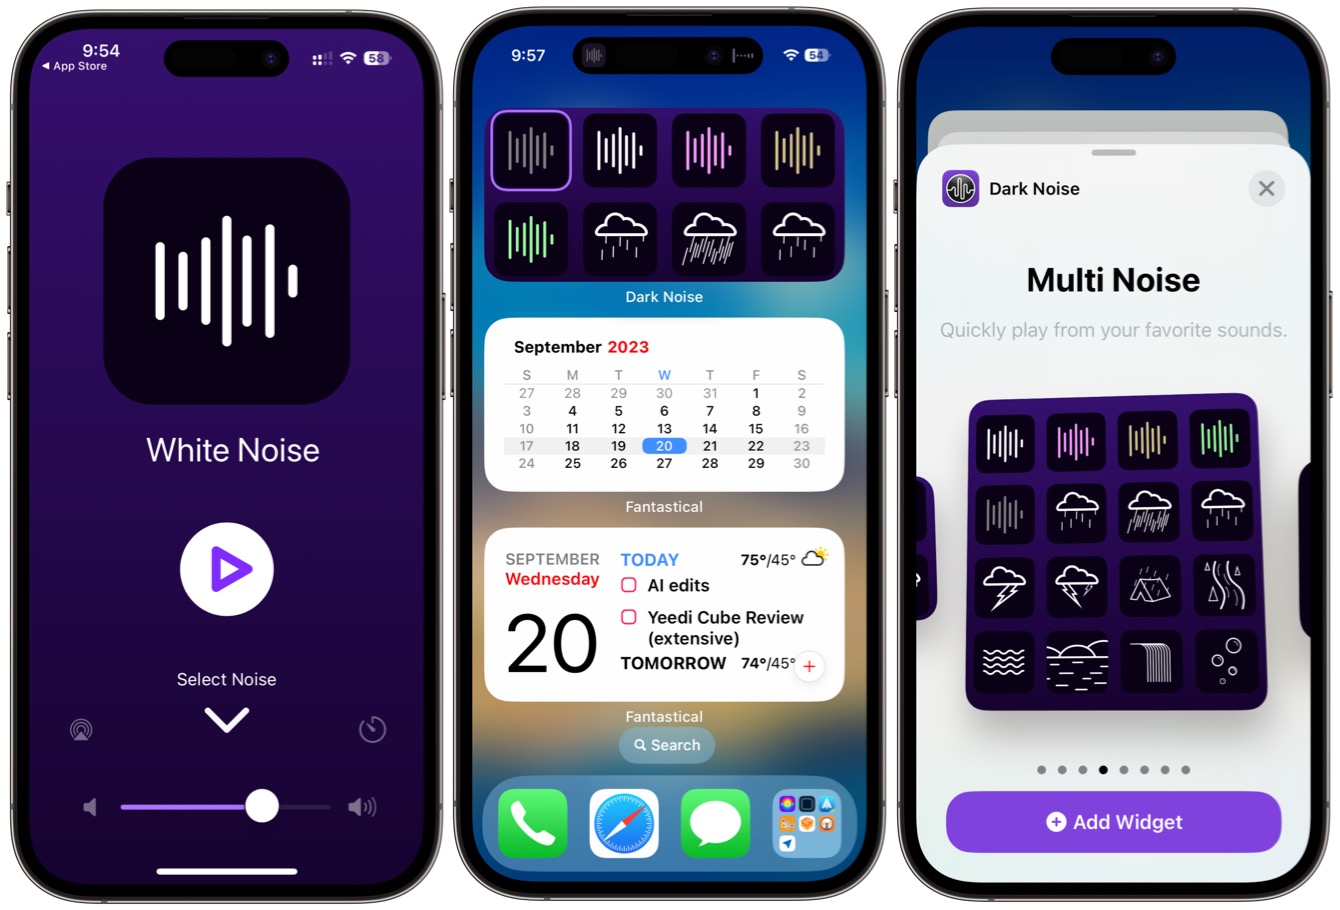 Dark Noise interactive widgets on iPhone